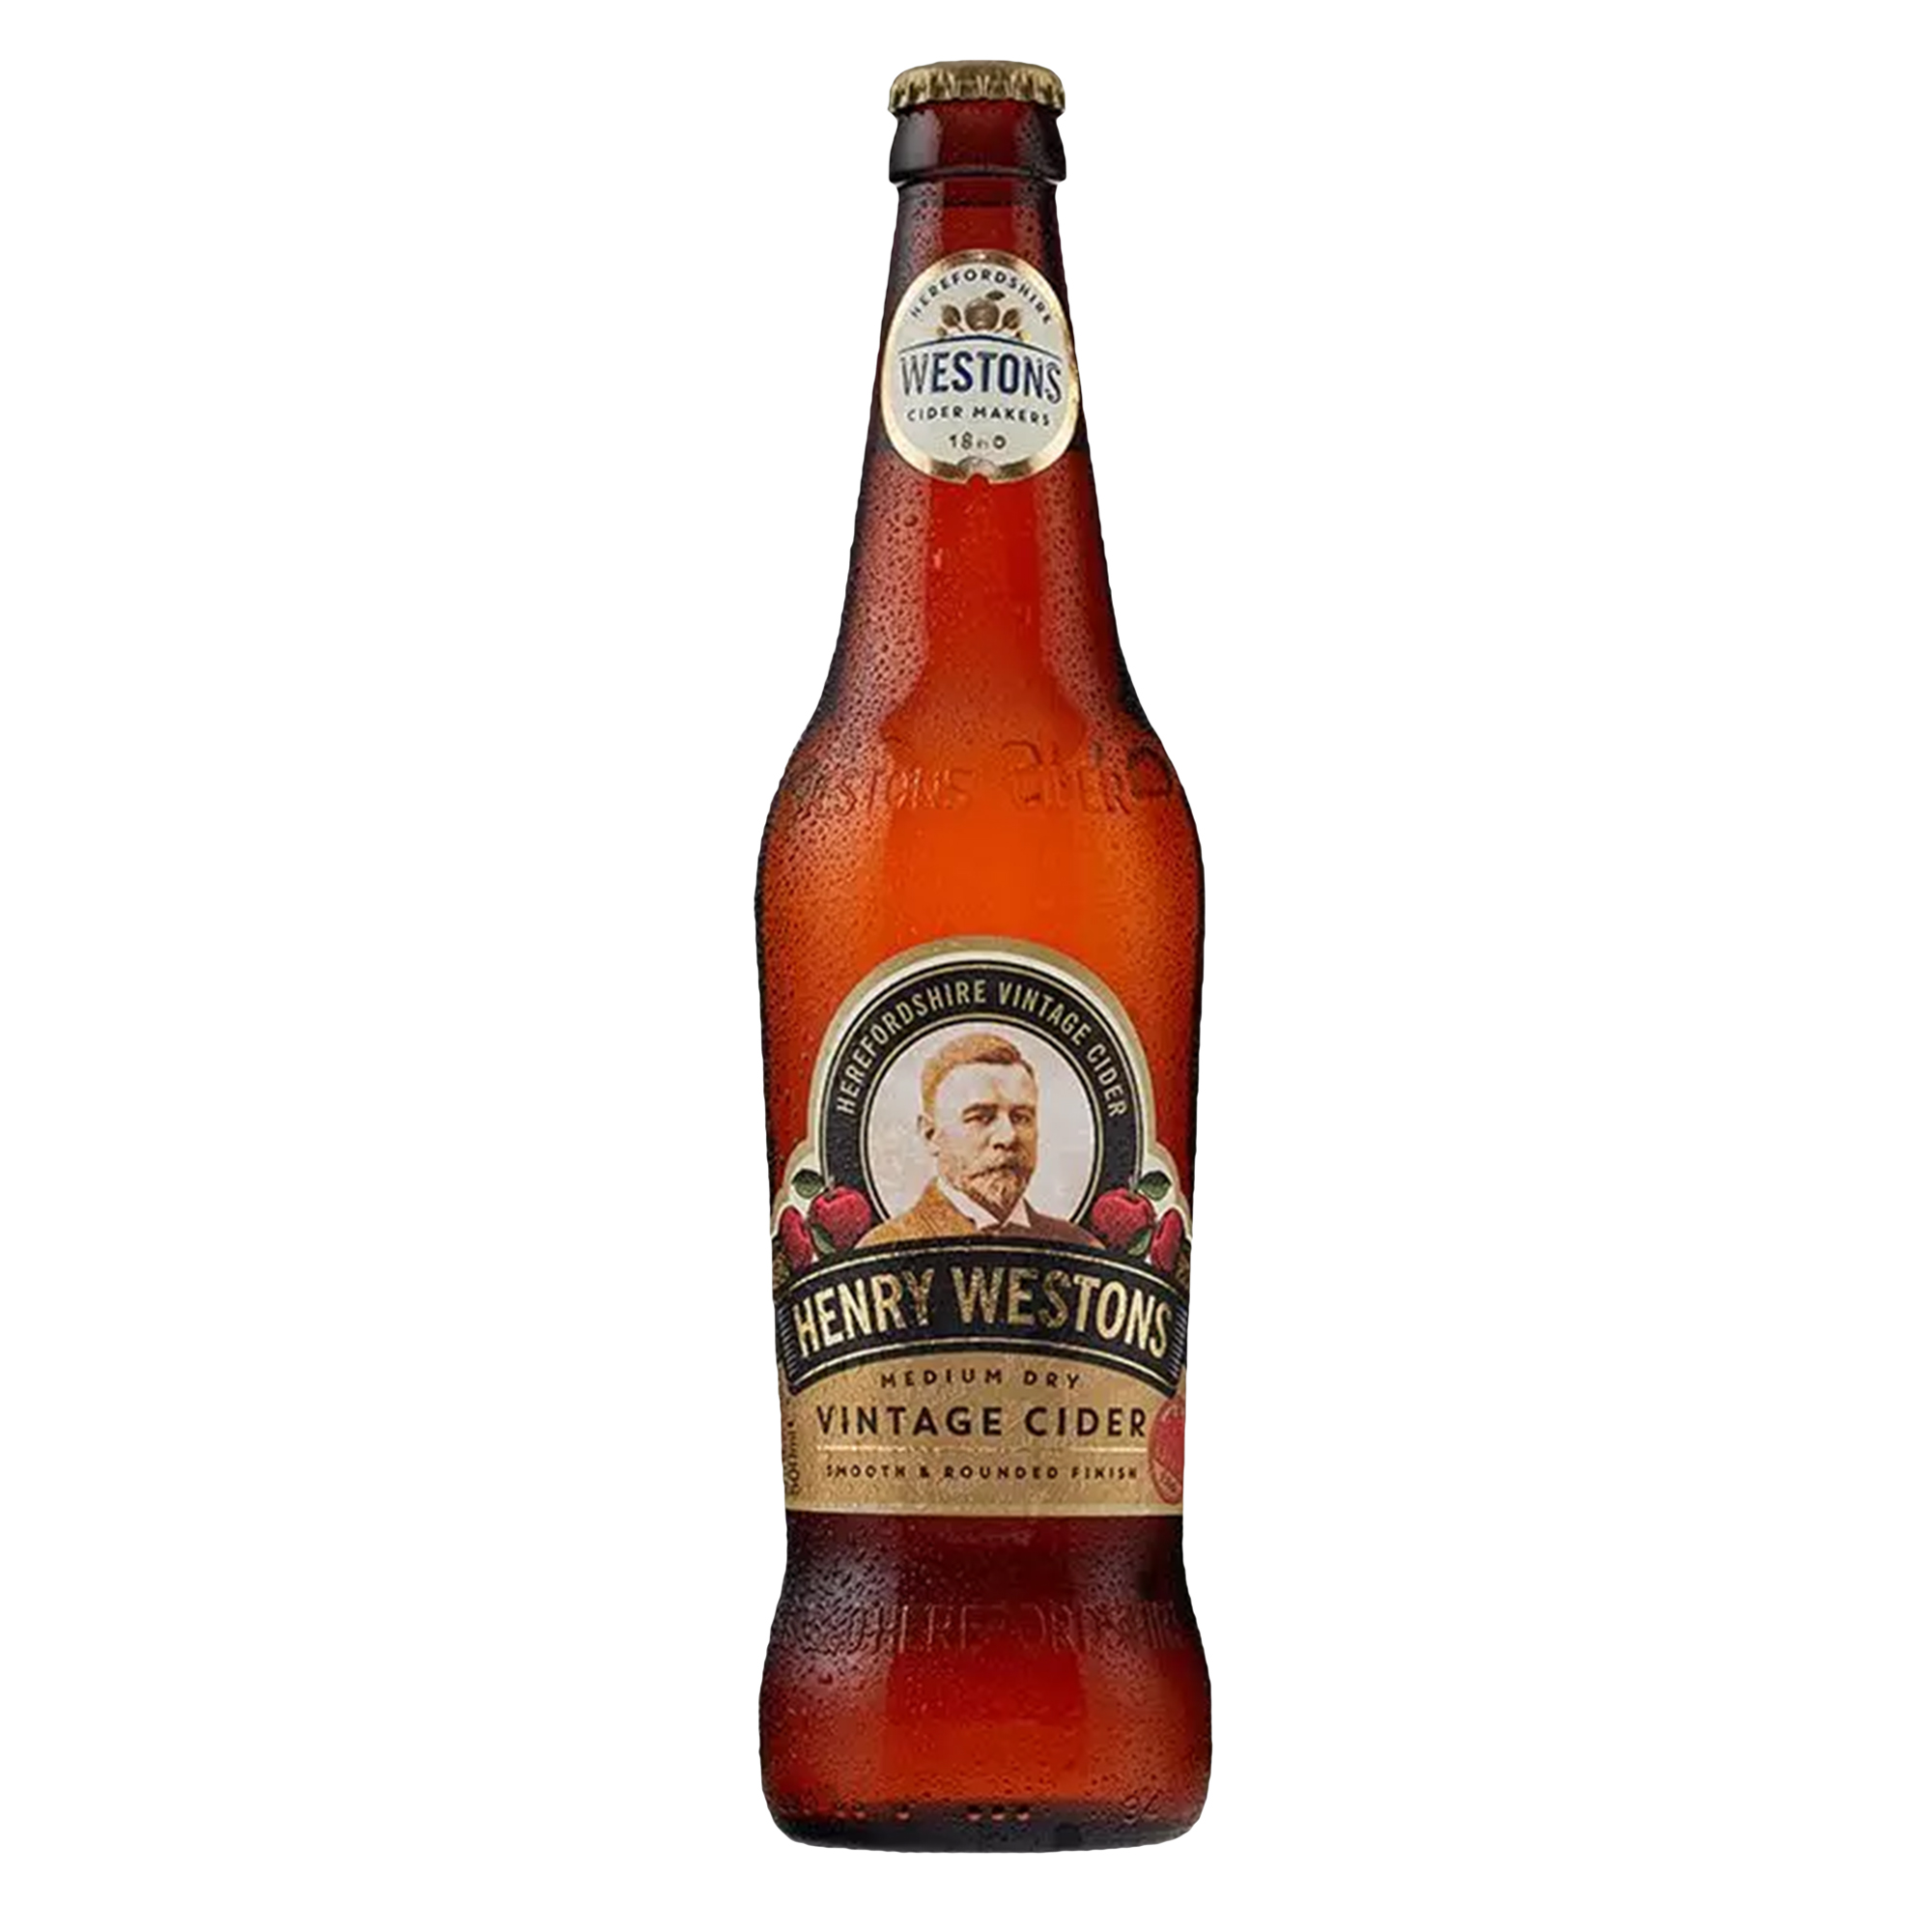 Henry Weston’s Medium Dry Vintage Cider 500ml